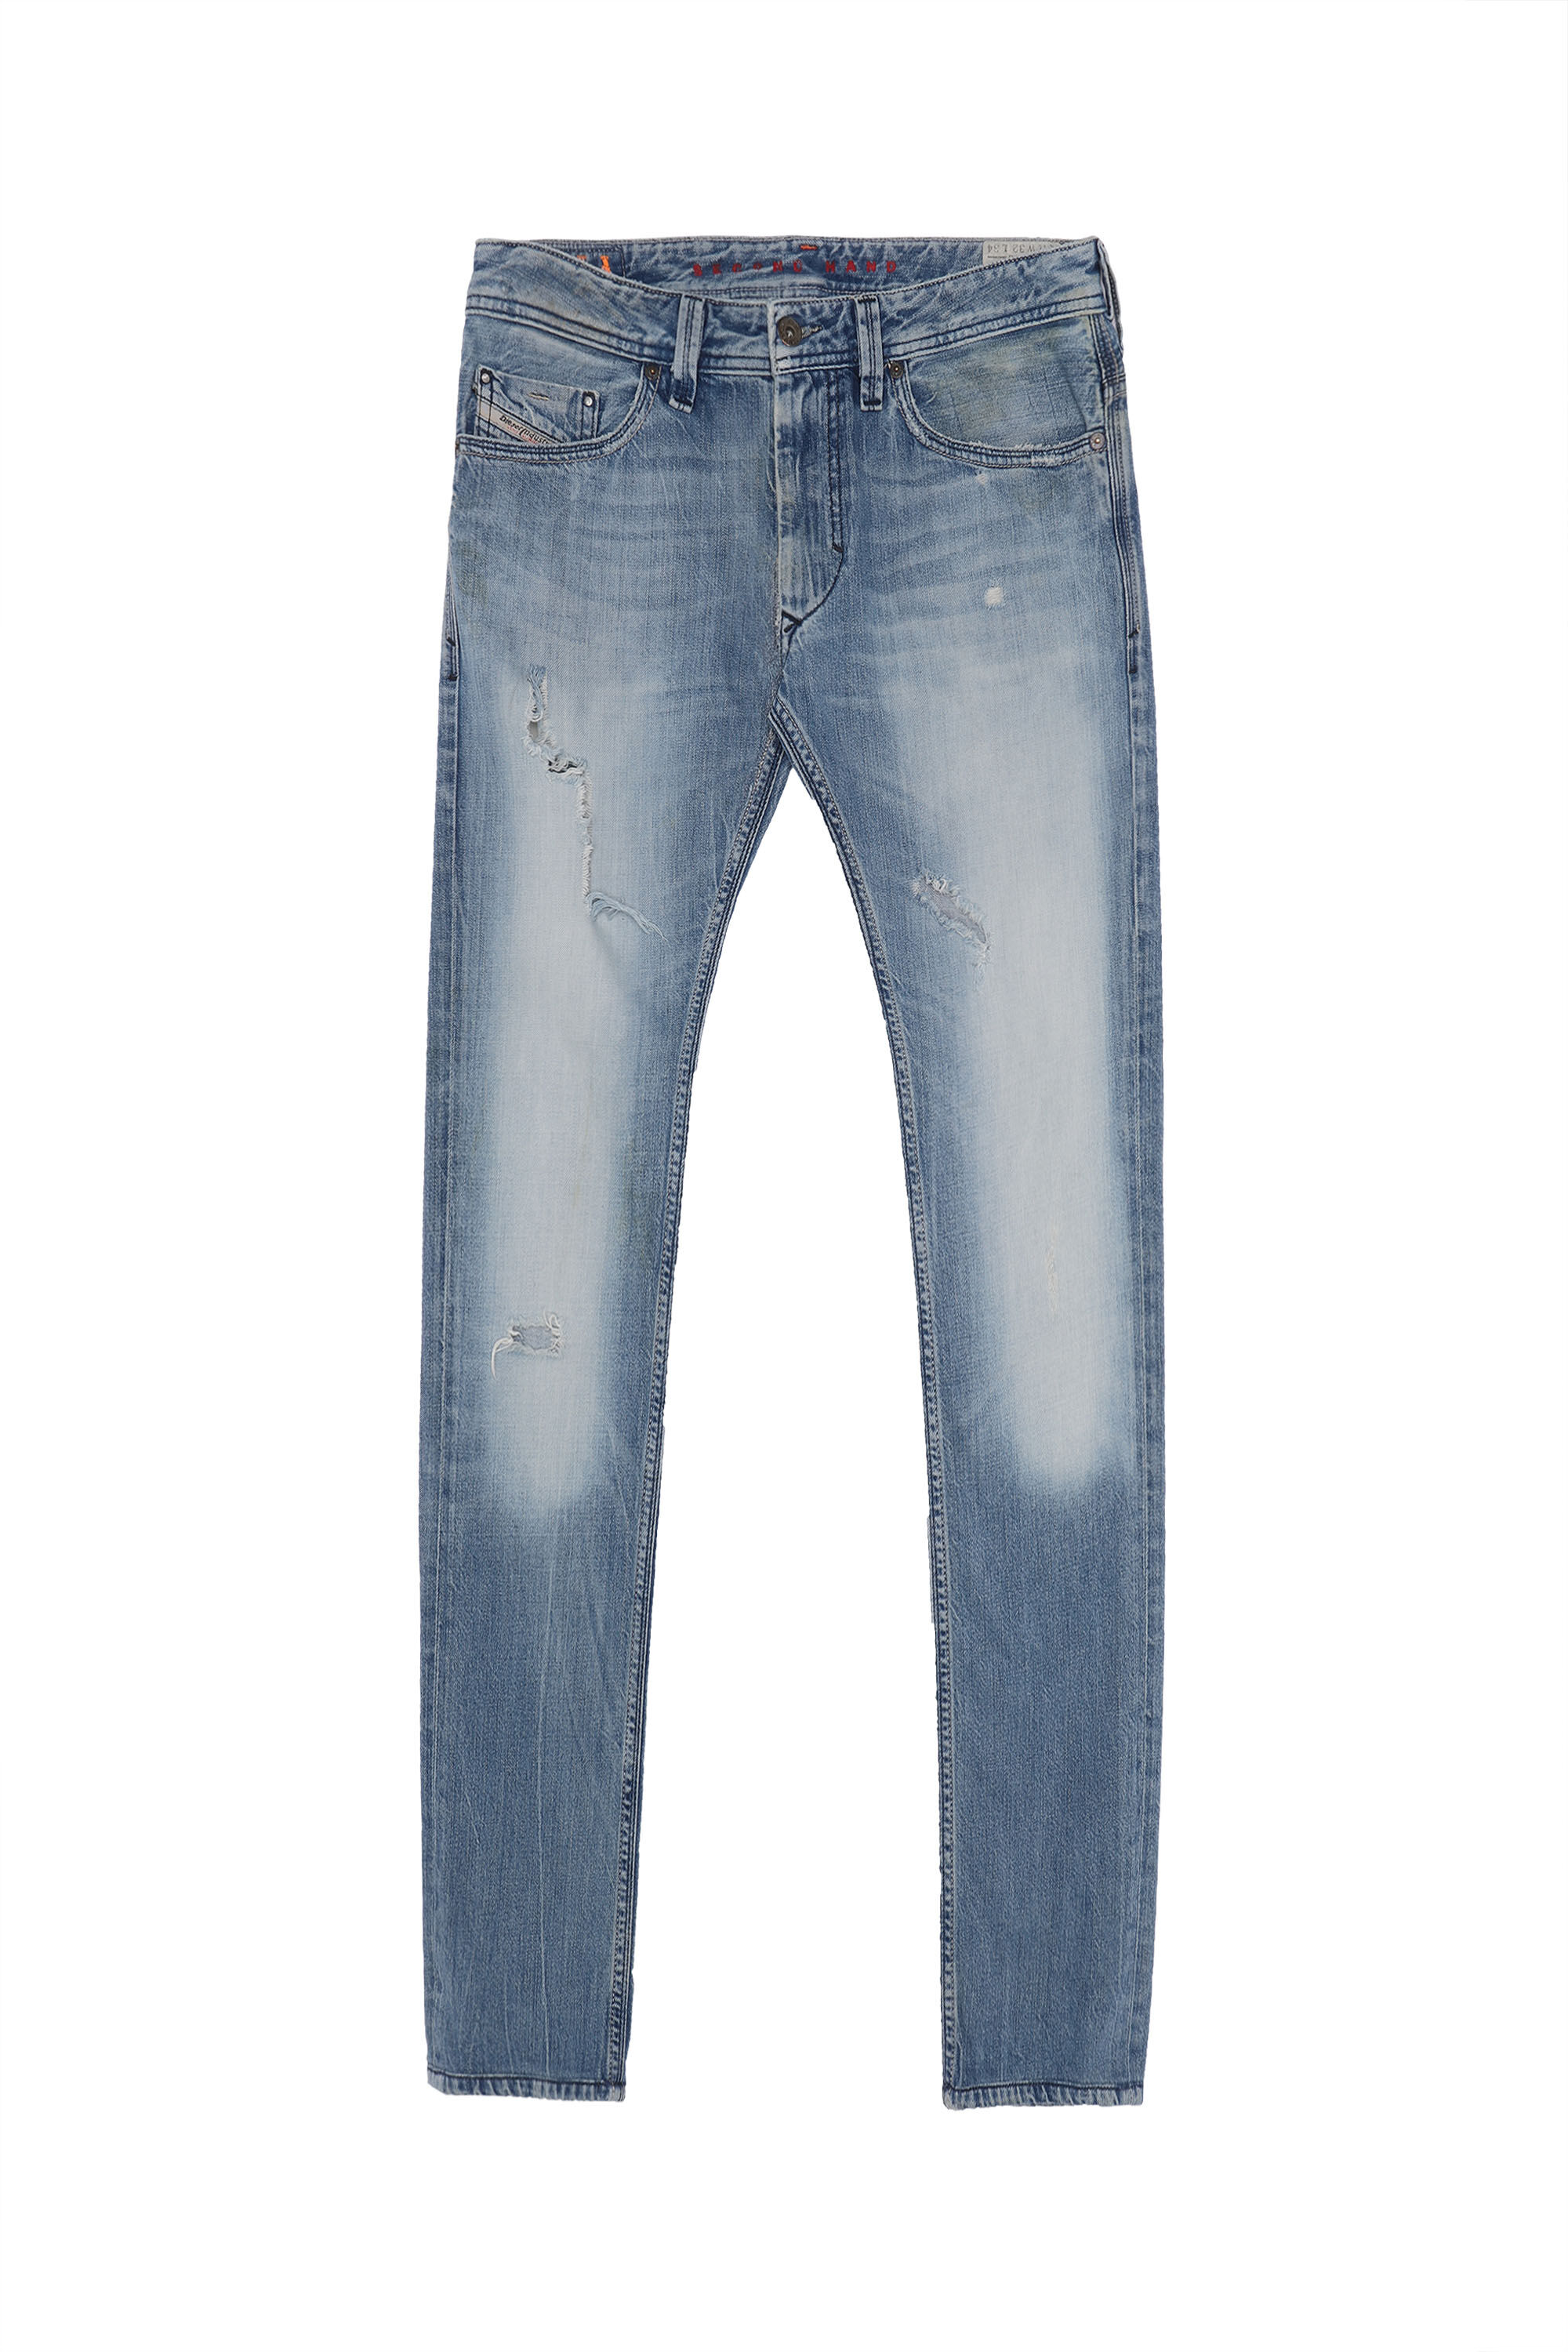 Melbourne Pelagisch slikken THANAZ Man Jeans | Diesel Second Hand